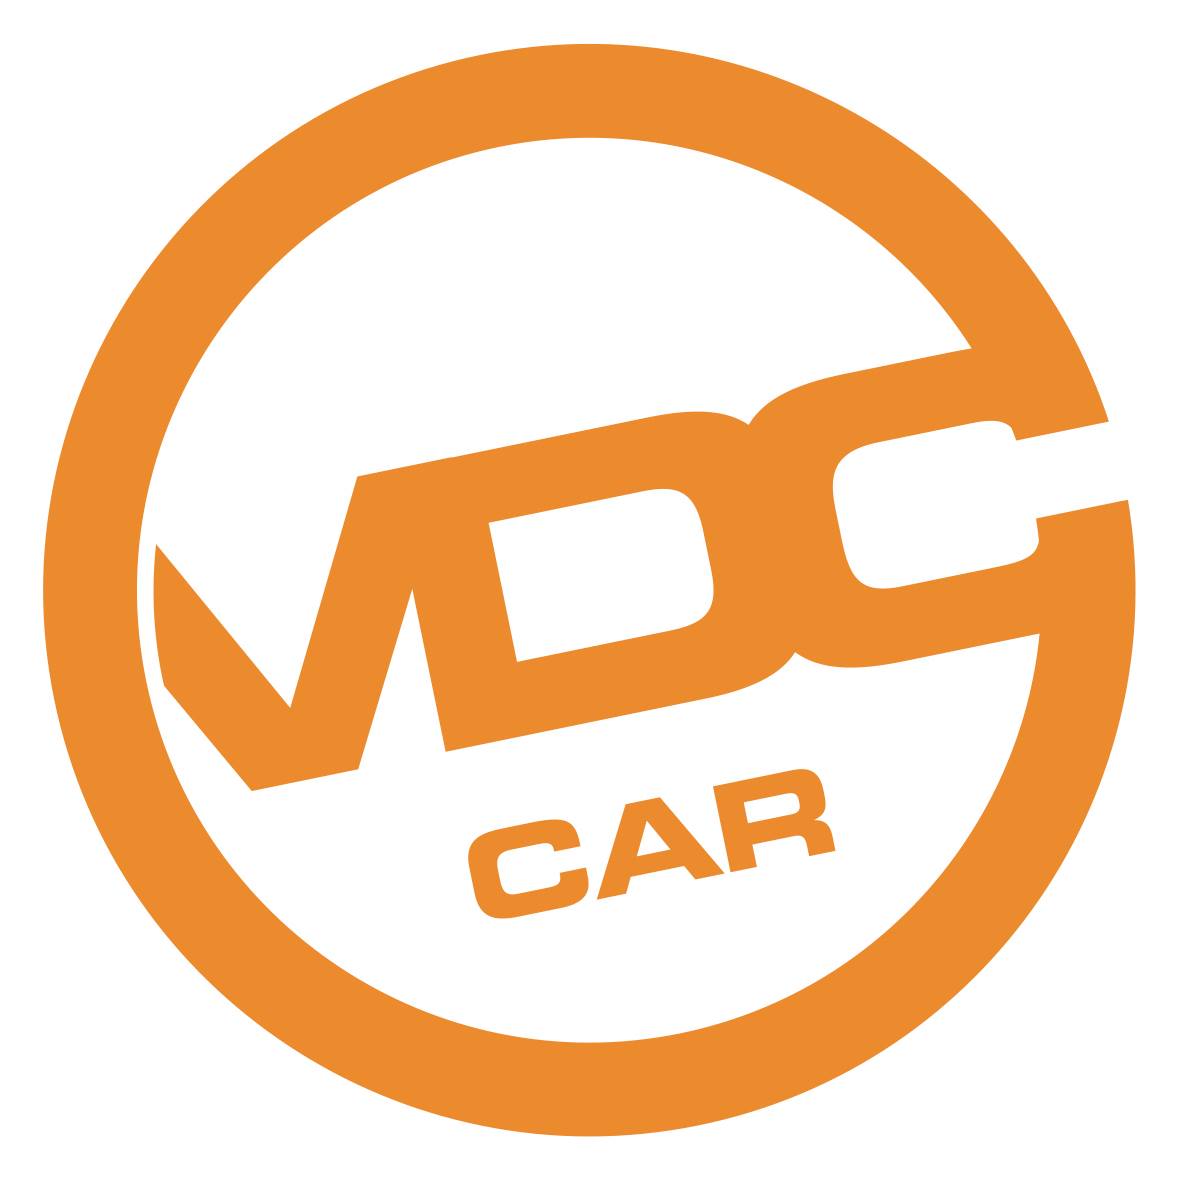 VDC Car